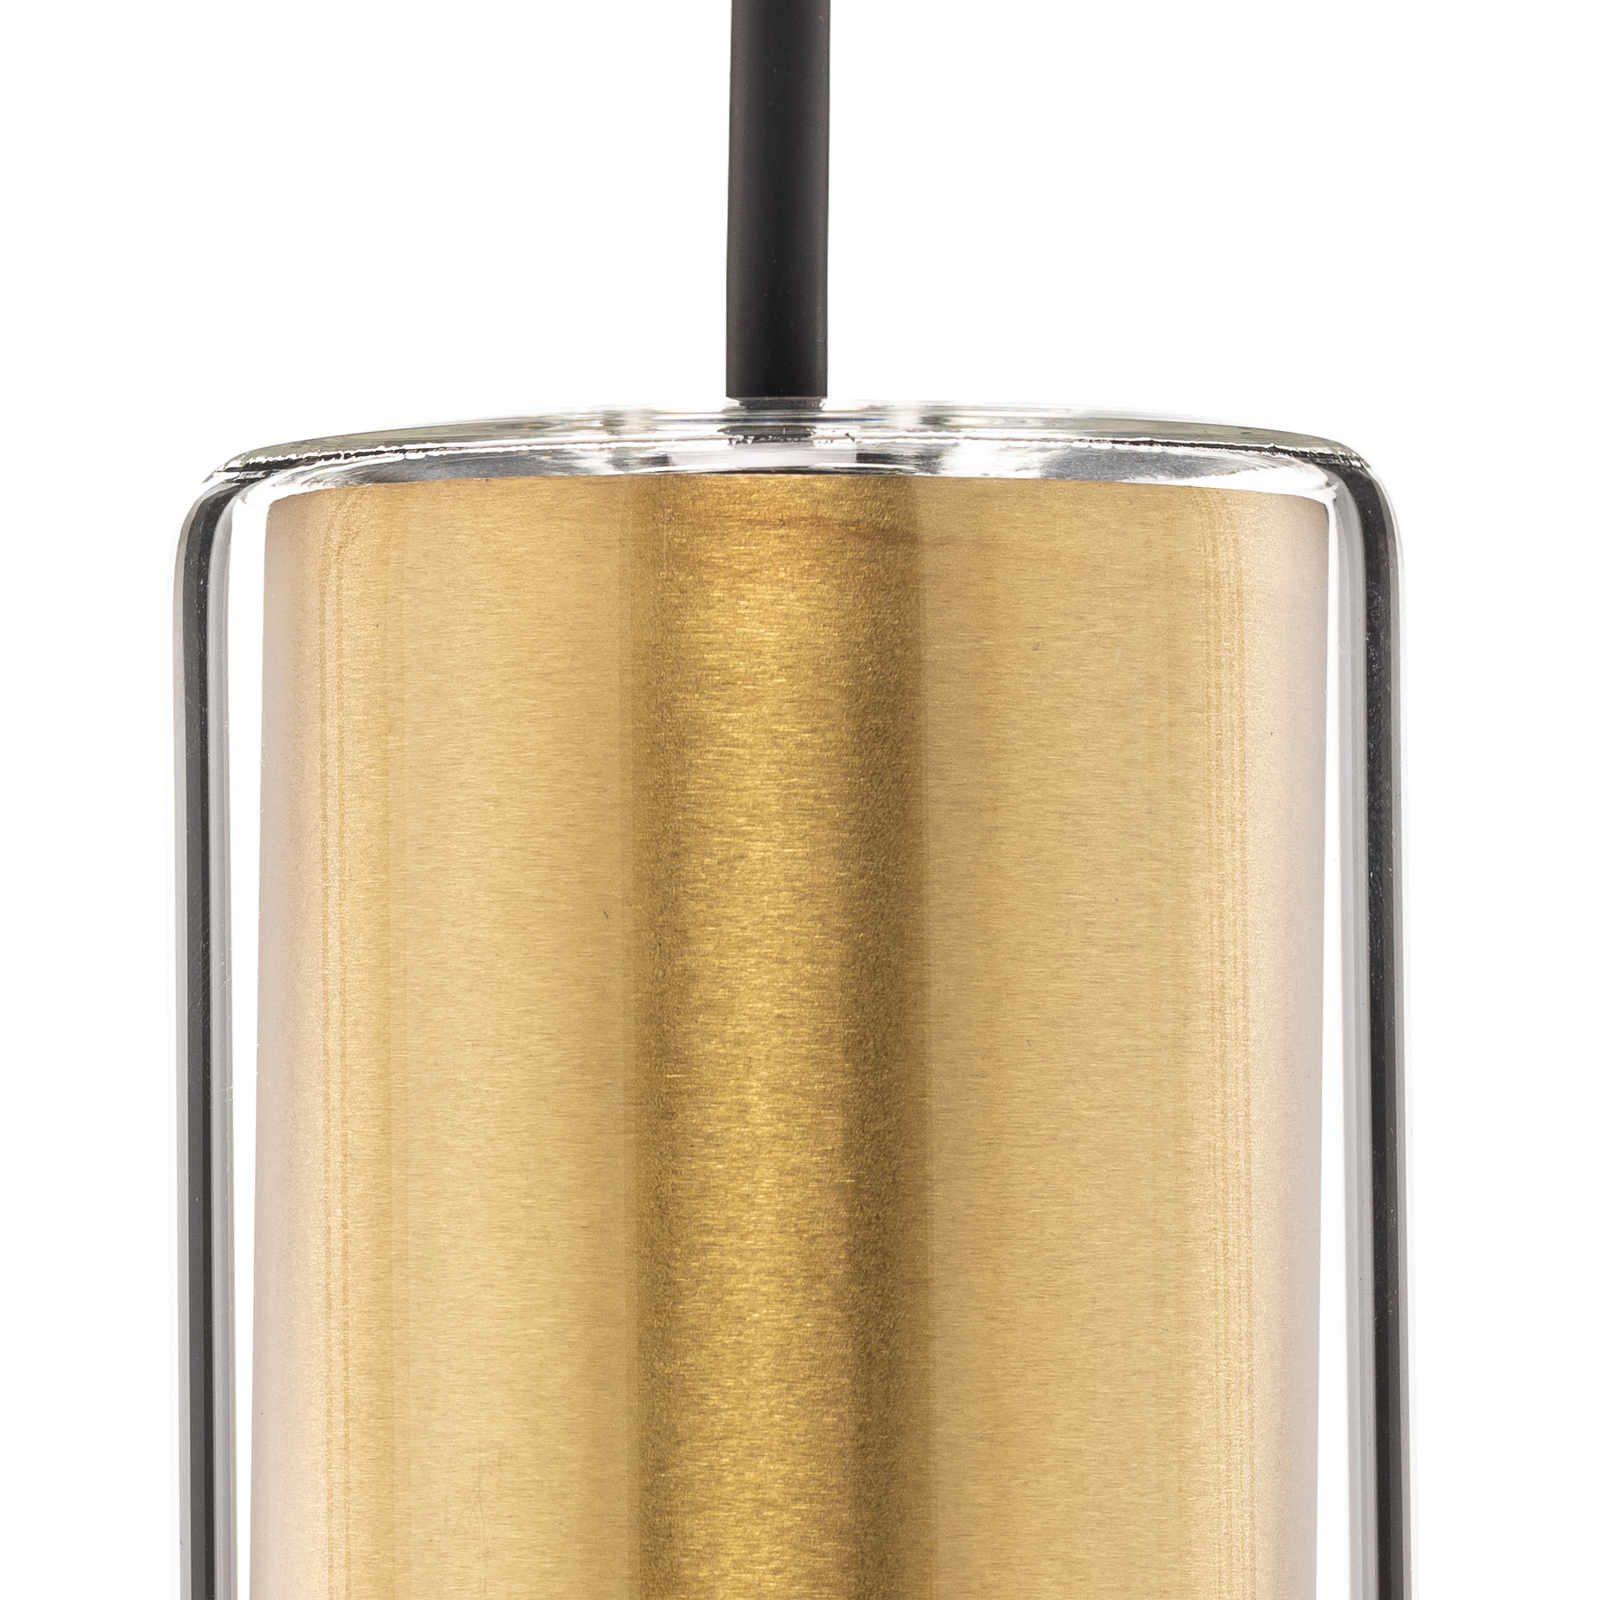 Cilinder hanglamp, helder/messing, hoogte 15 cm